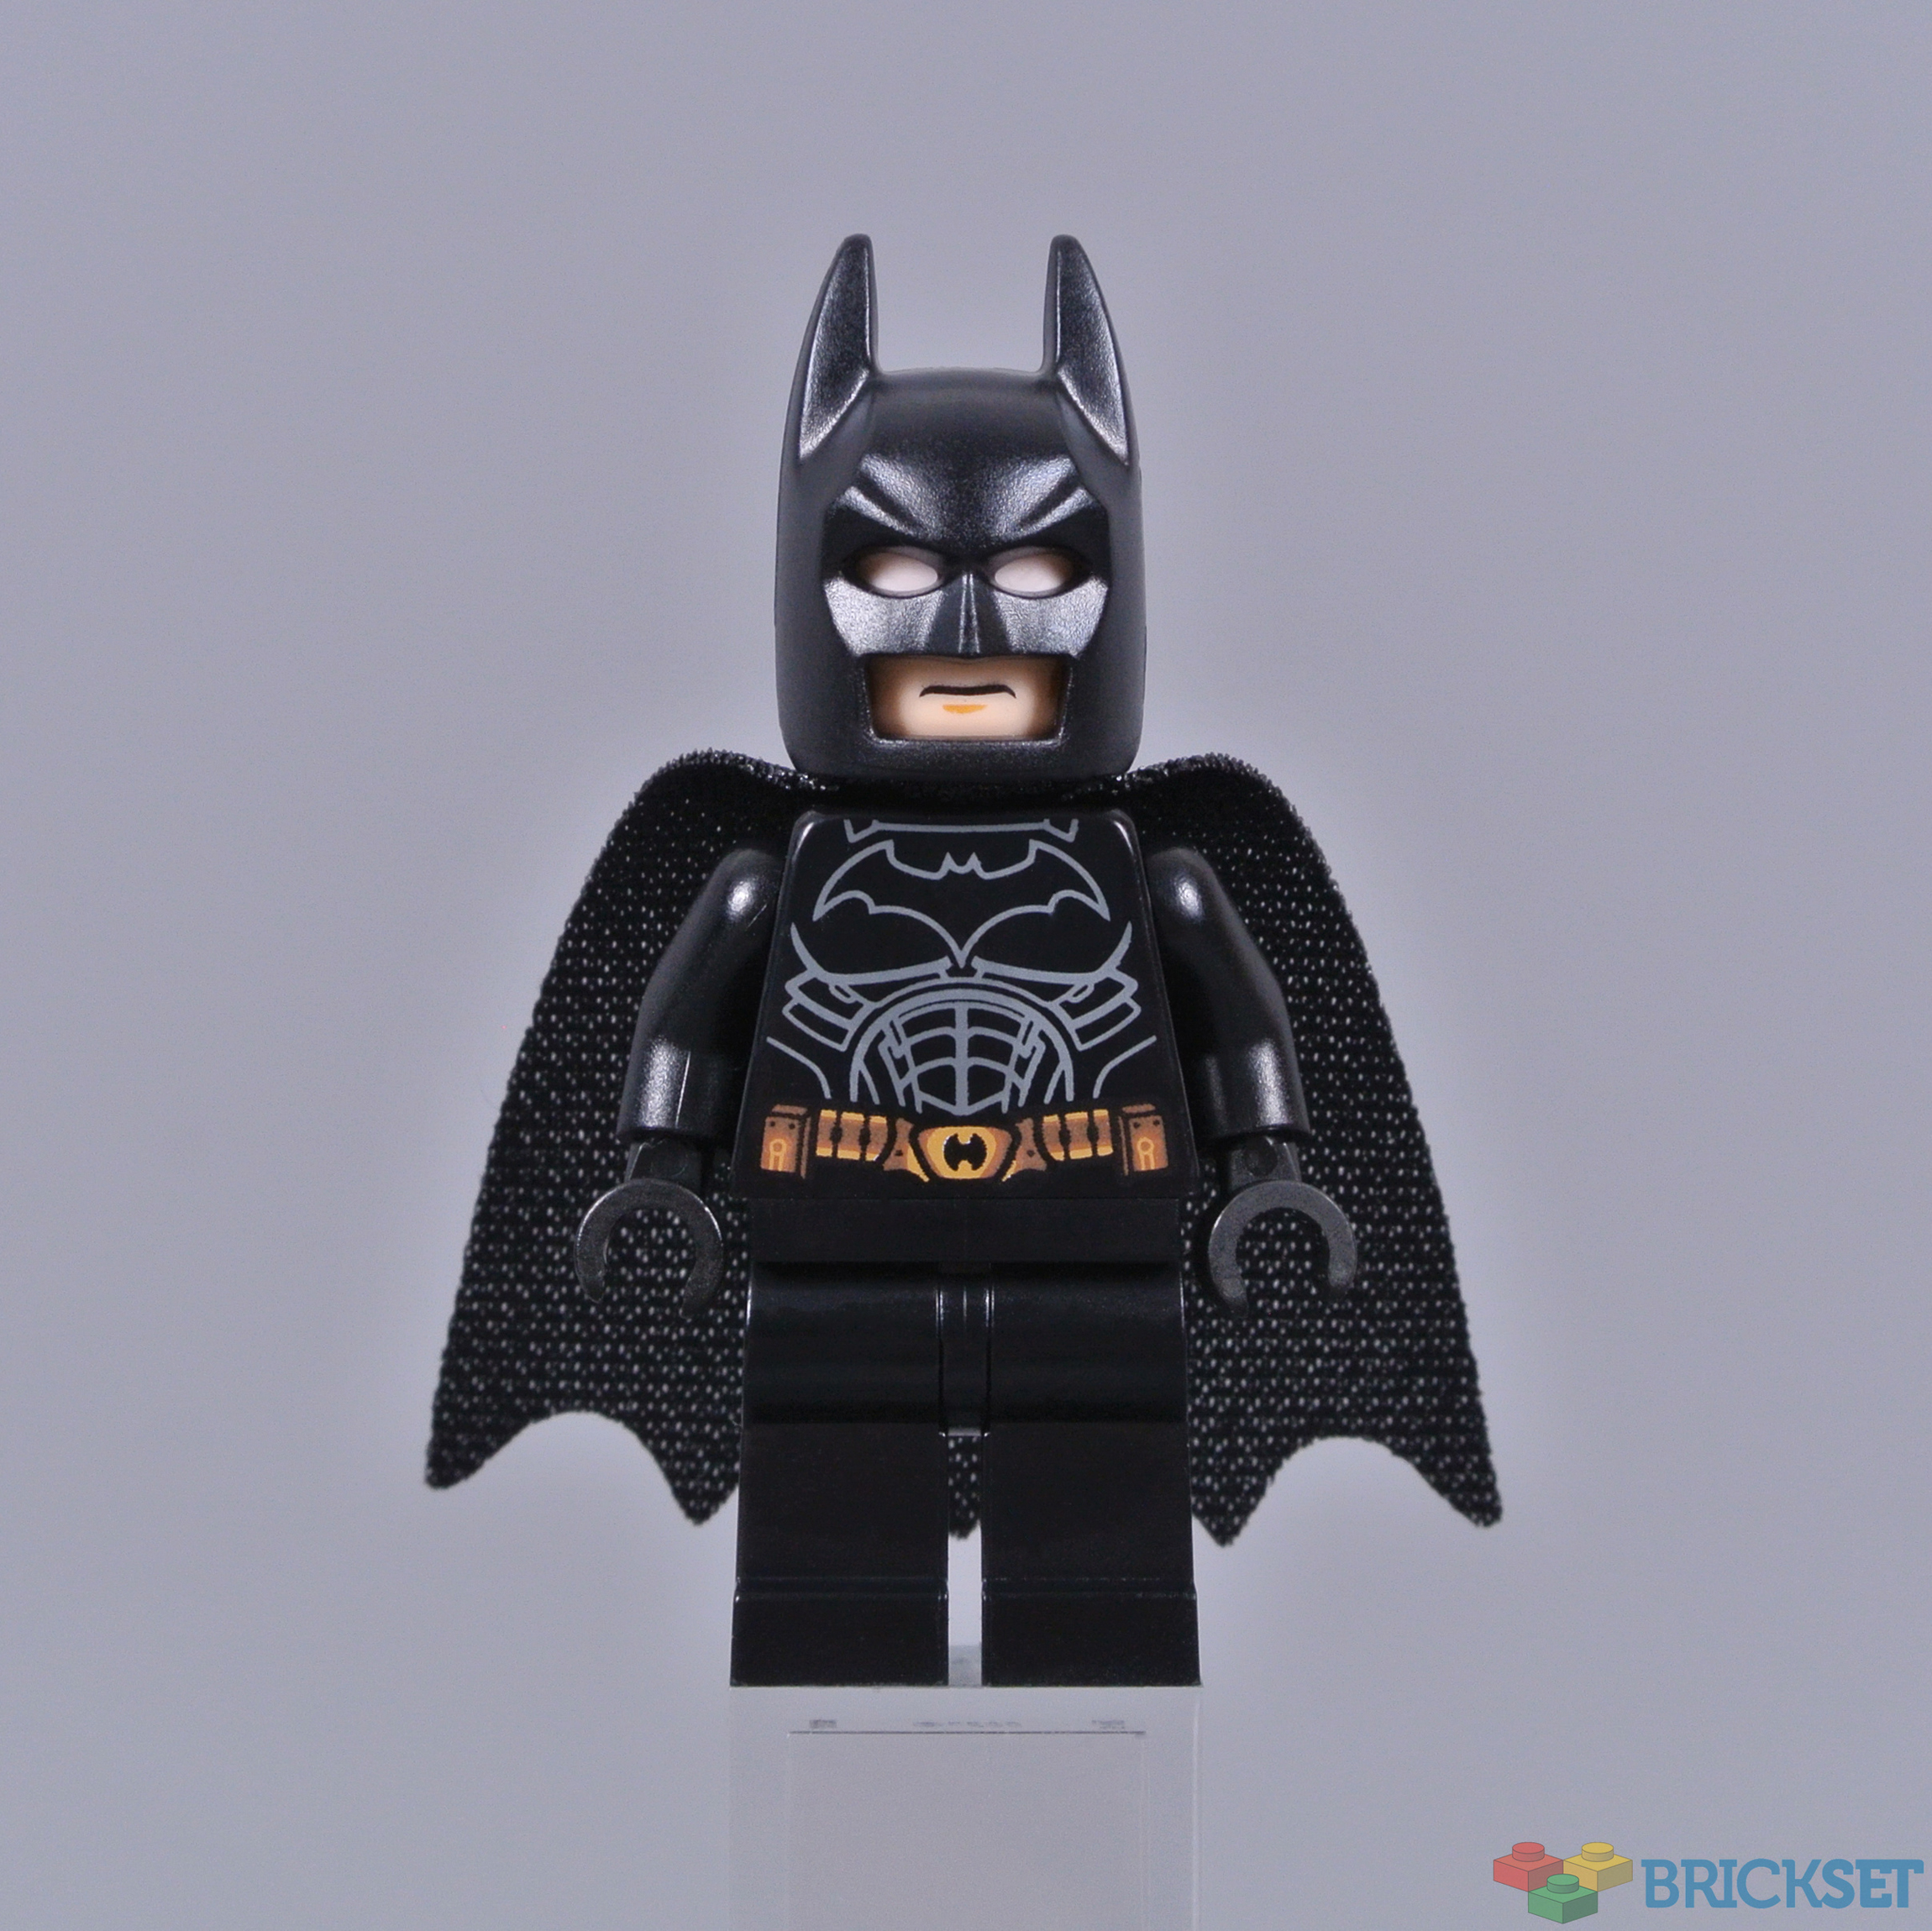 New Batman LEGO Set Announced - Dark Knight News